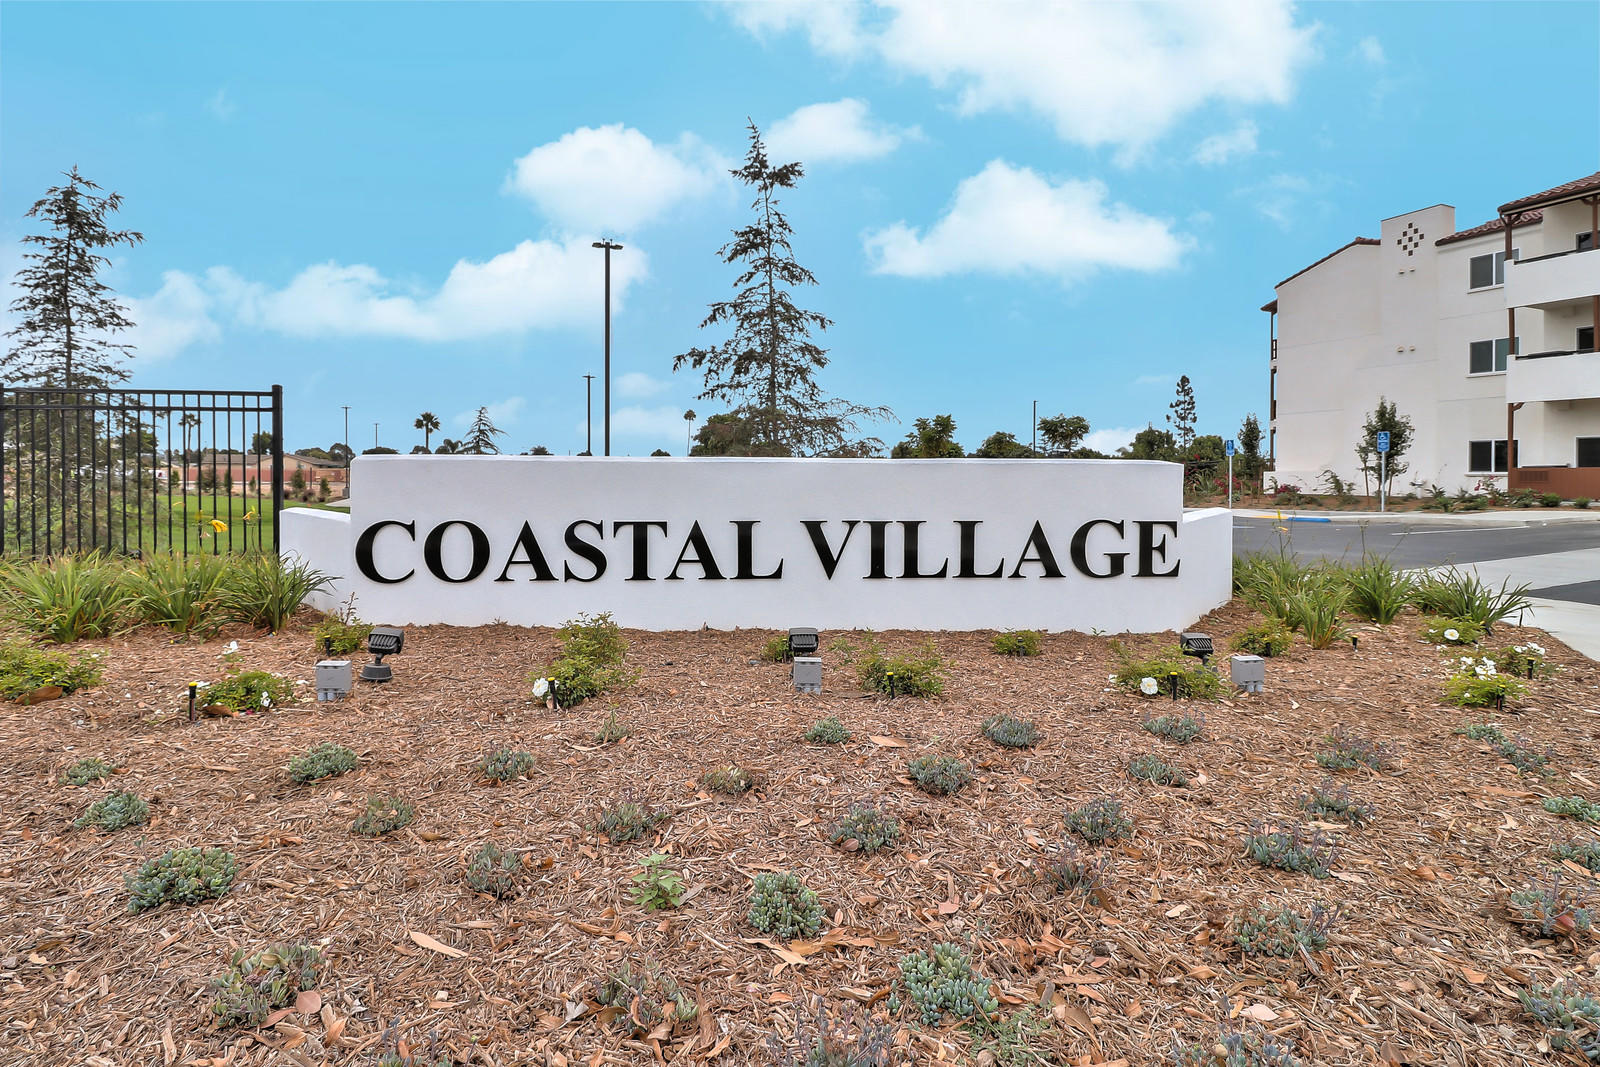 Coastal Village Photo